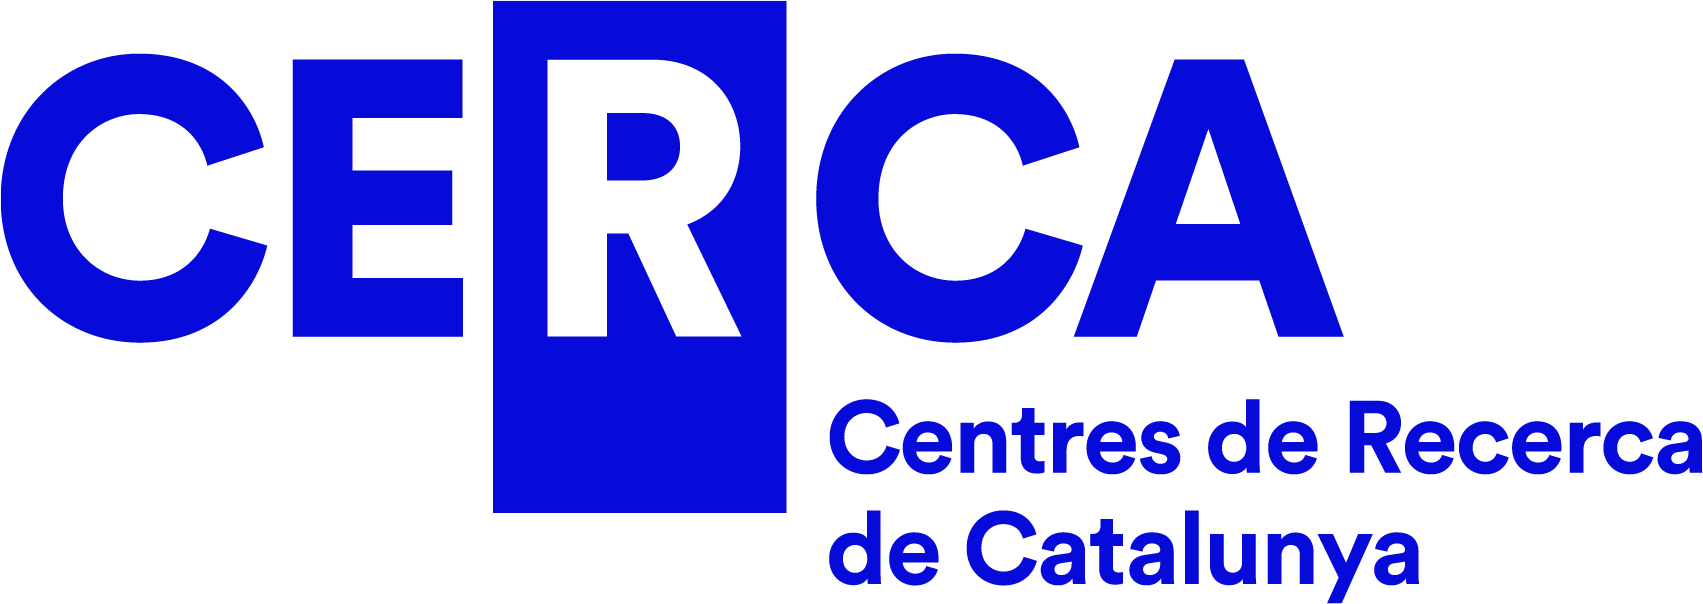 CERCA - Centres de Recerca de Catalunya